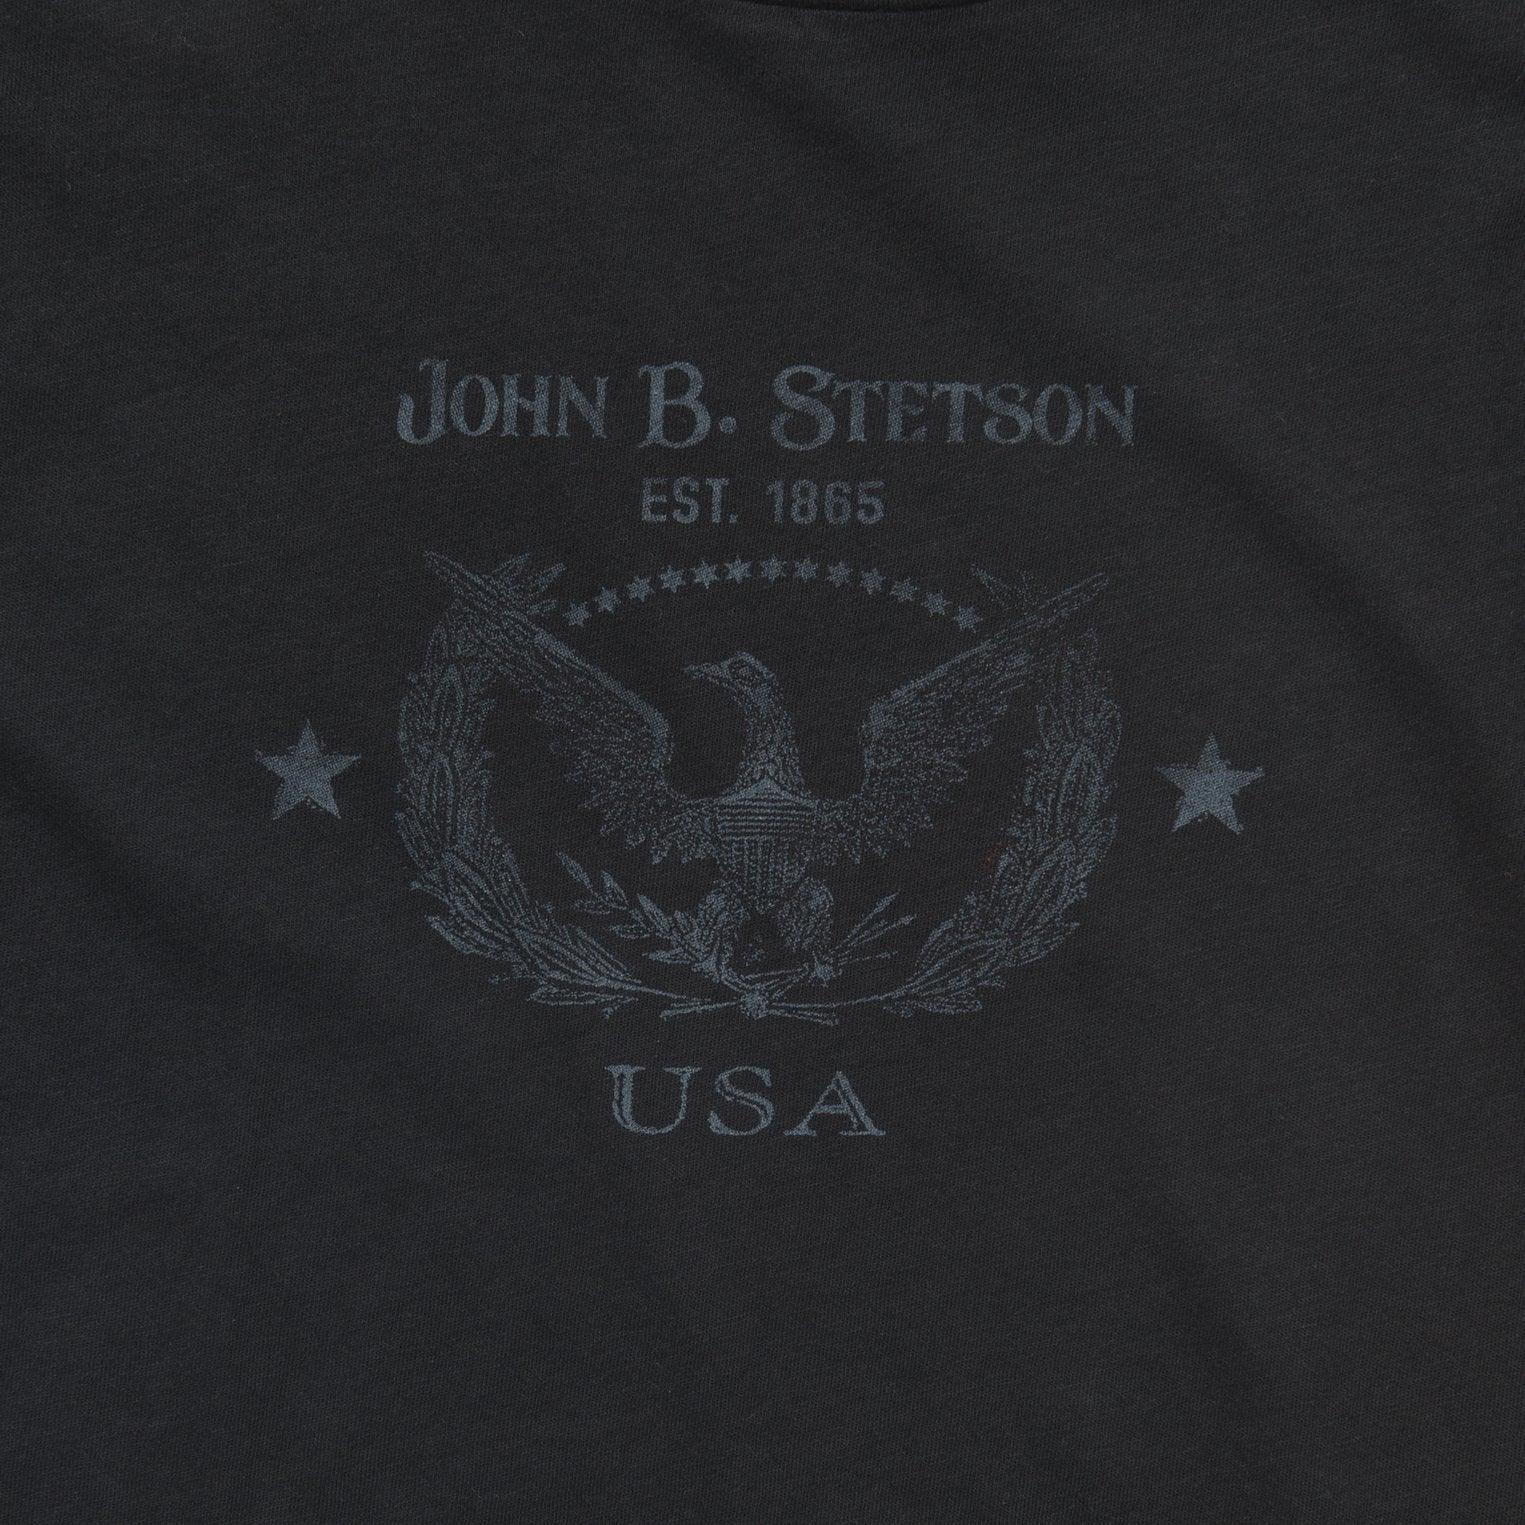 Stetson John B. Stetson Eagle Graphic Tee - Flyclothing LLC